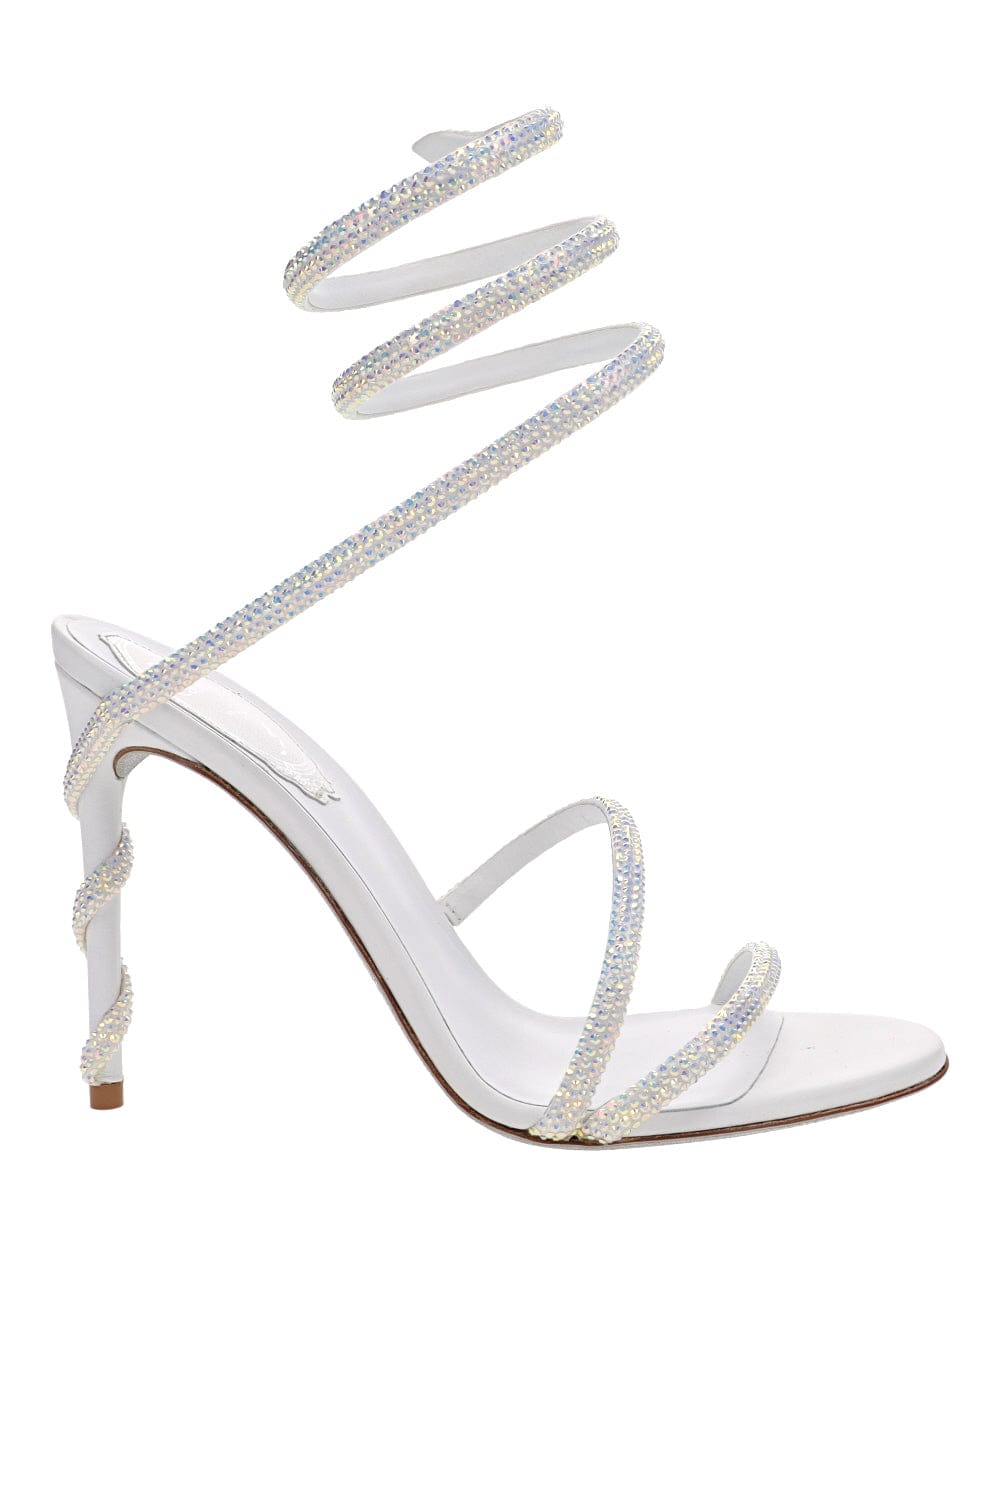 RENE CAOVILLA Margot Ivory Embellished Ankle Wrap Heels